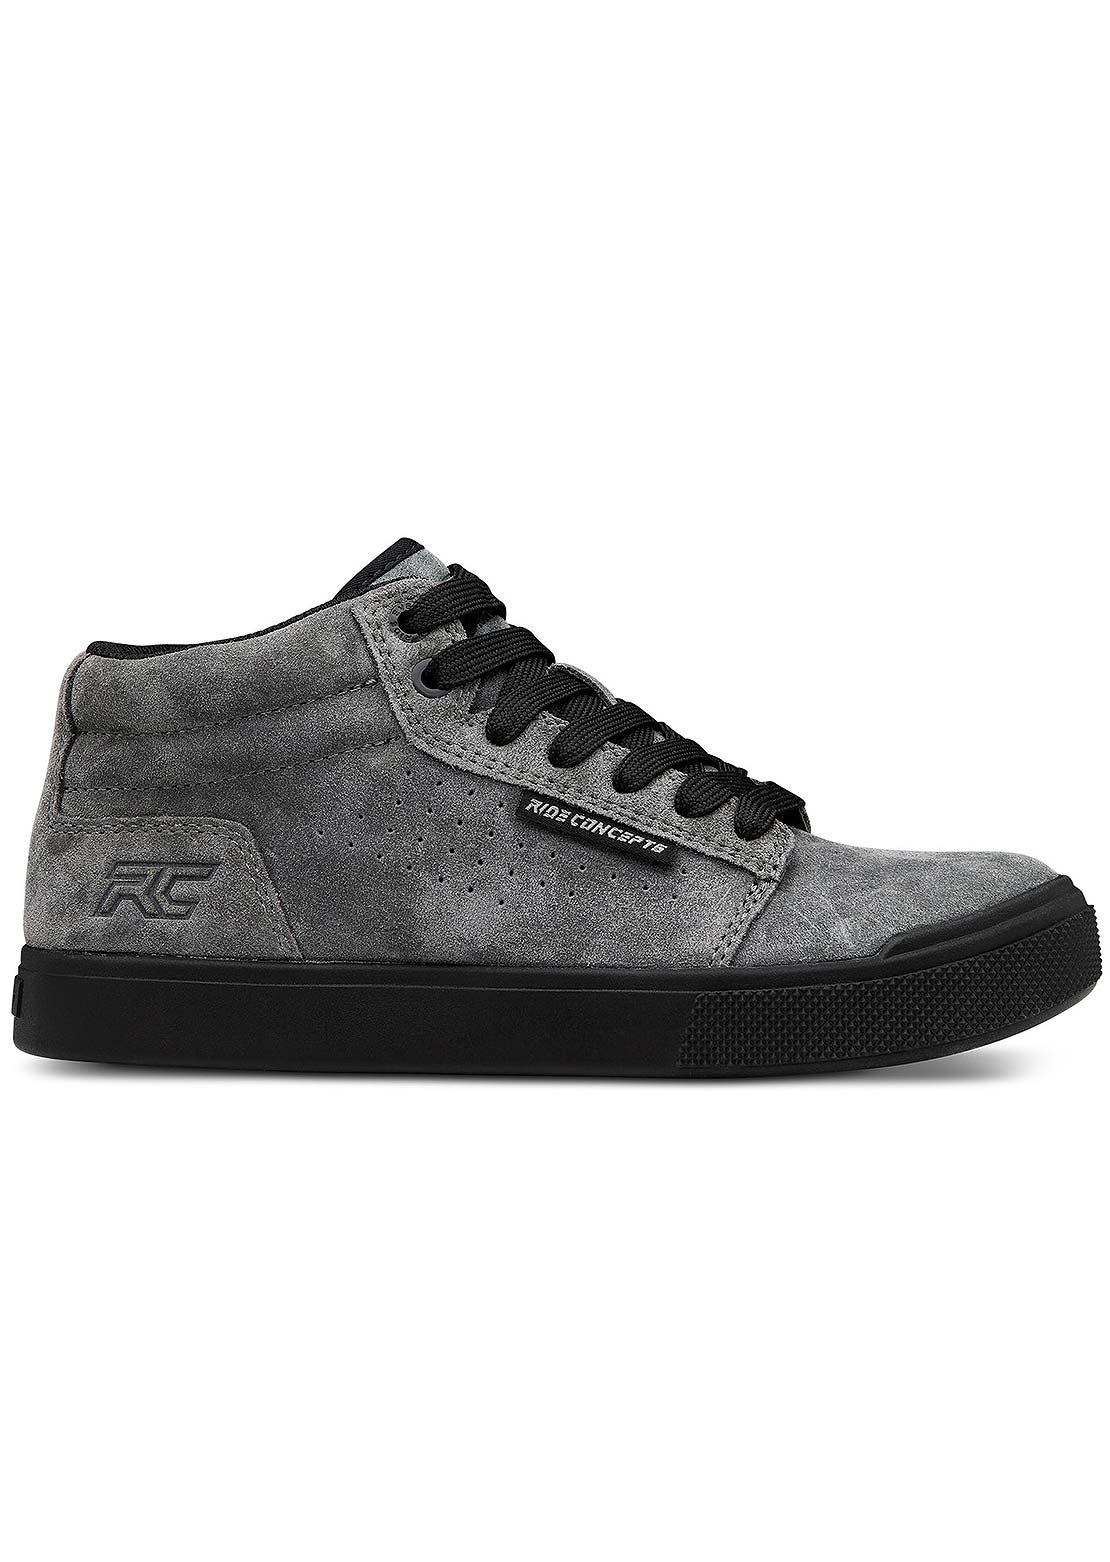 Ride Concepts Junior Vice Mid Flat Shoes Charcoal/Black